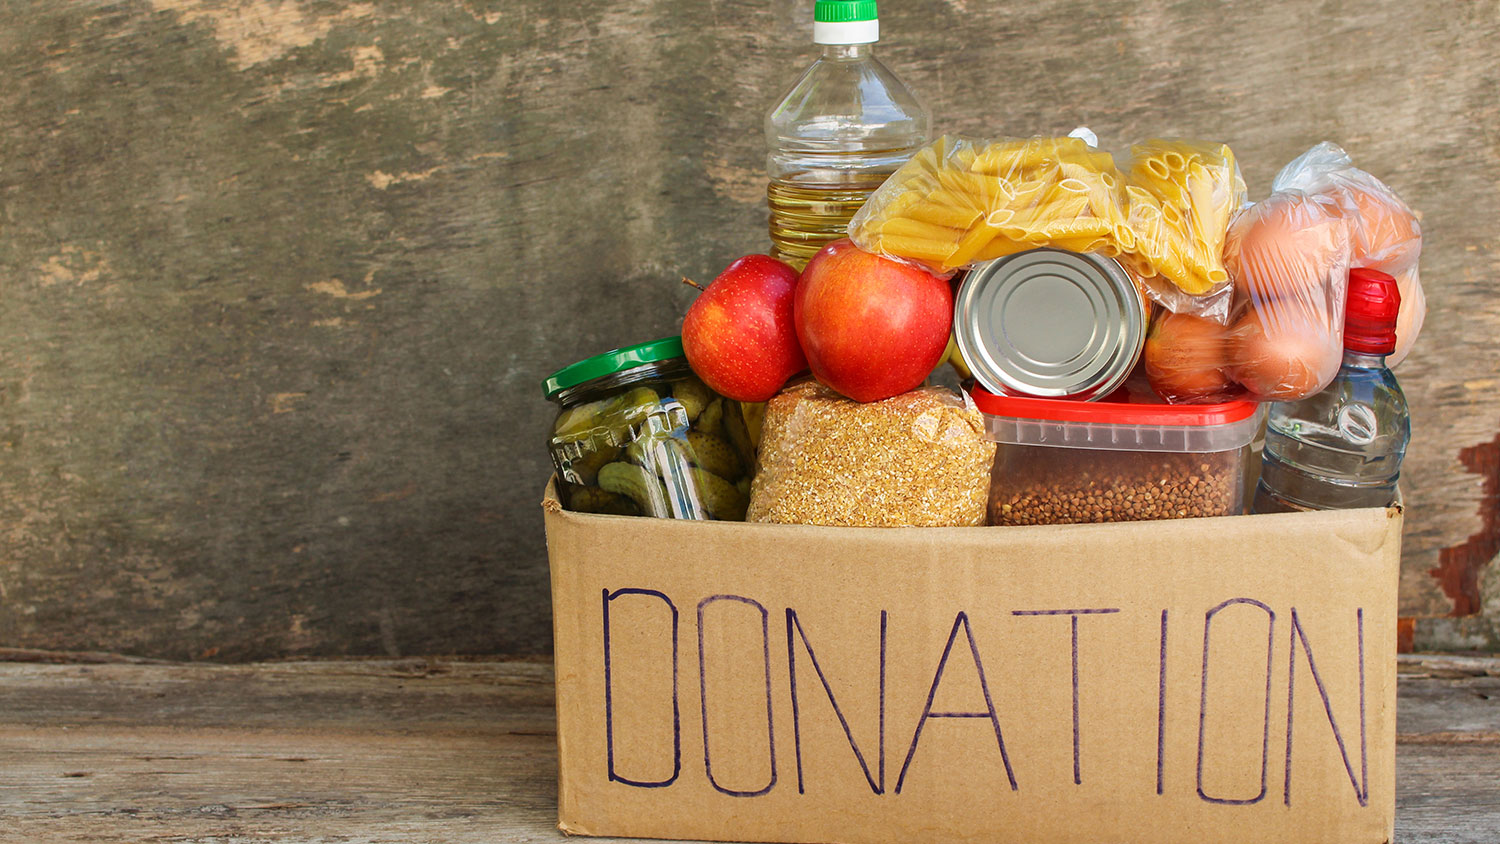 Donation box of food